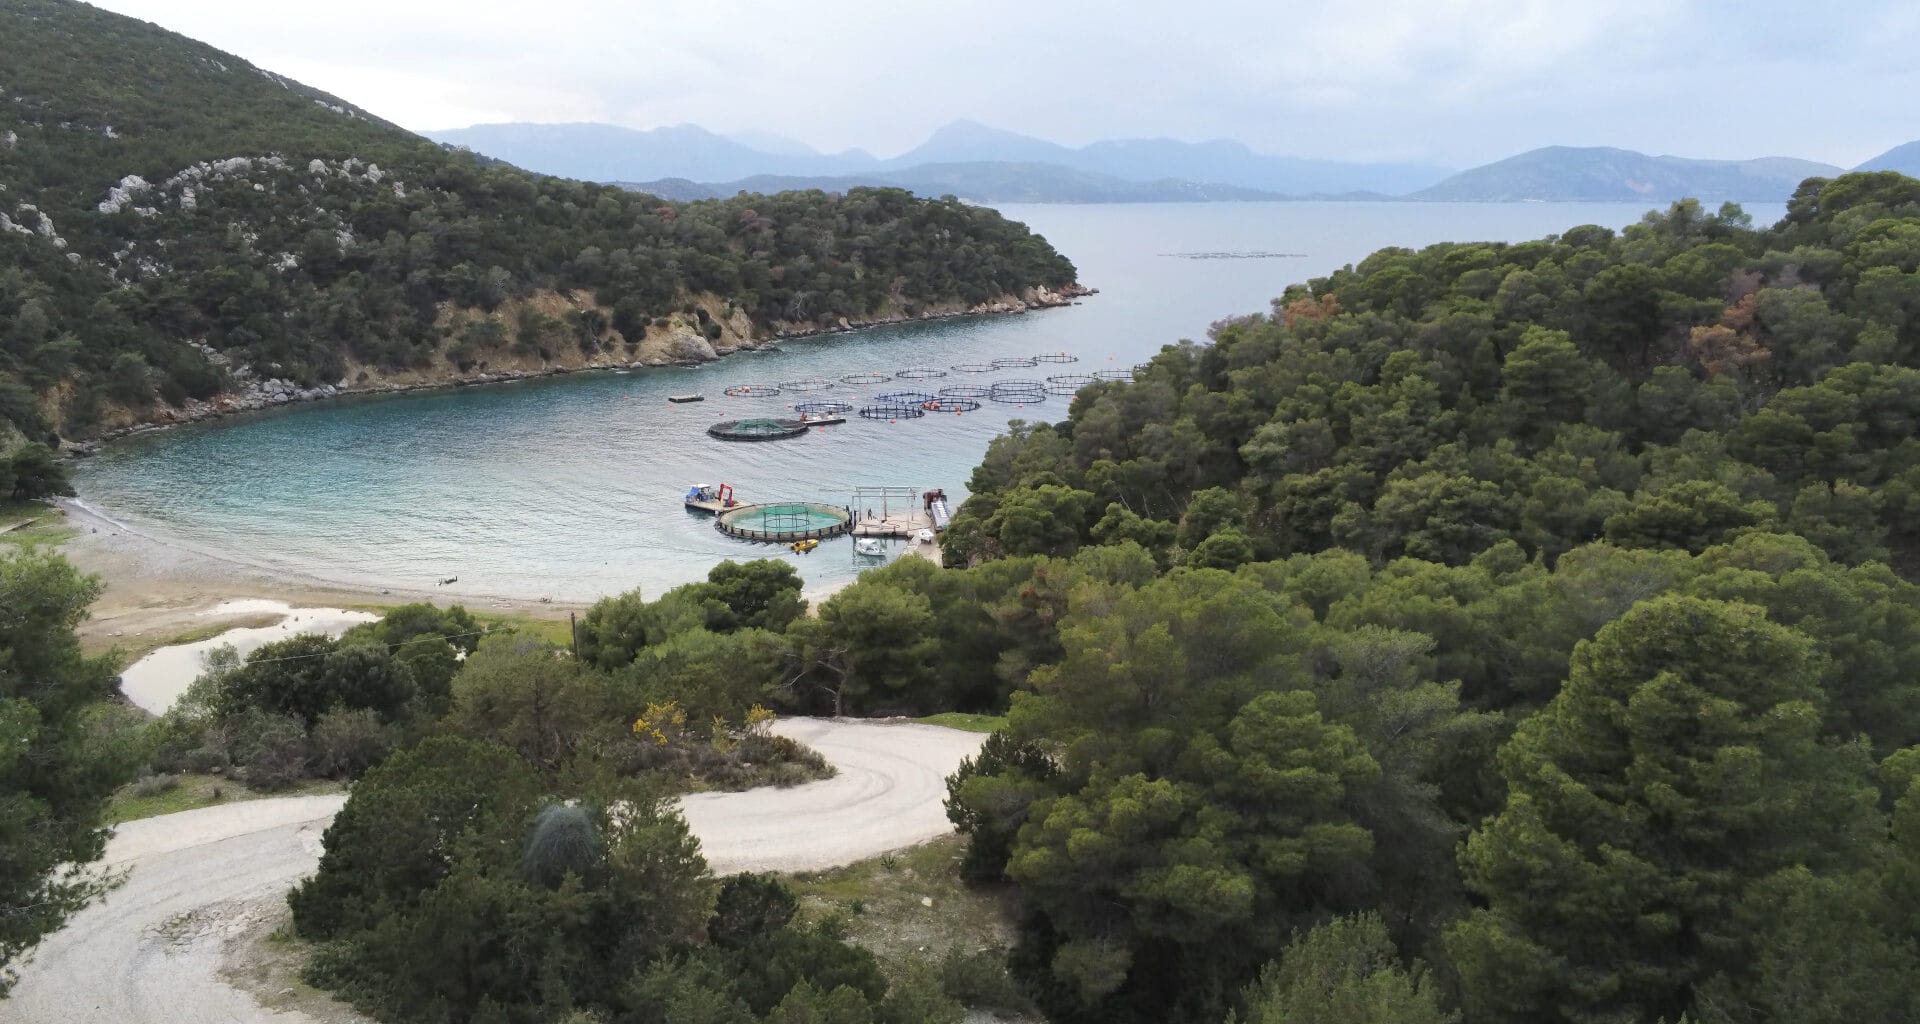 Greek island of Poros threatened by industrial fish farming, say locals 7